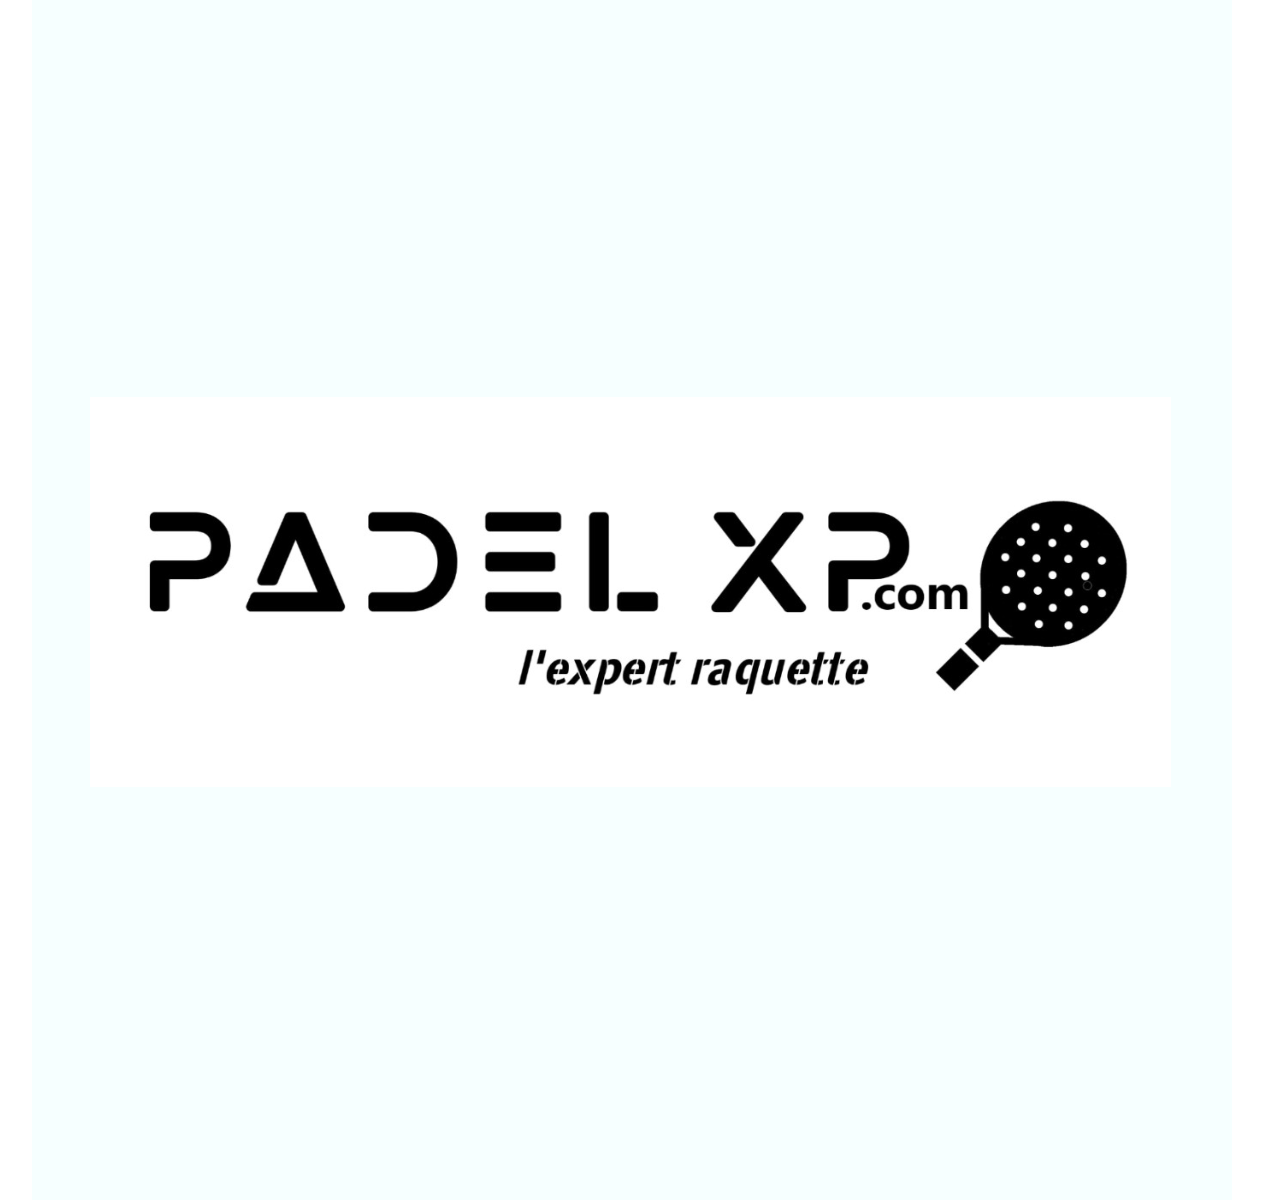 Soon_PadelXPcom3